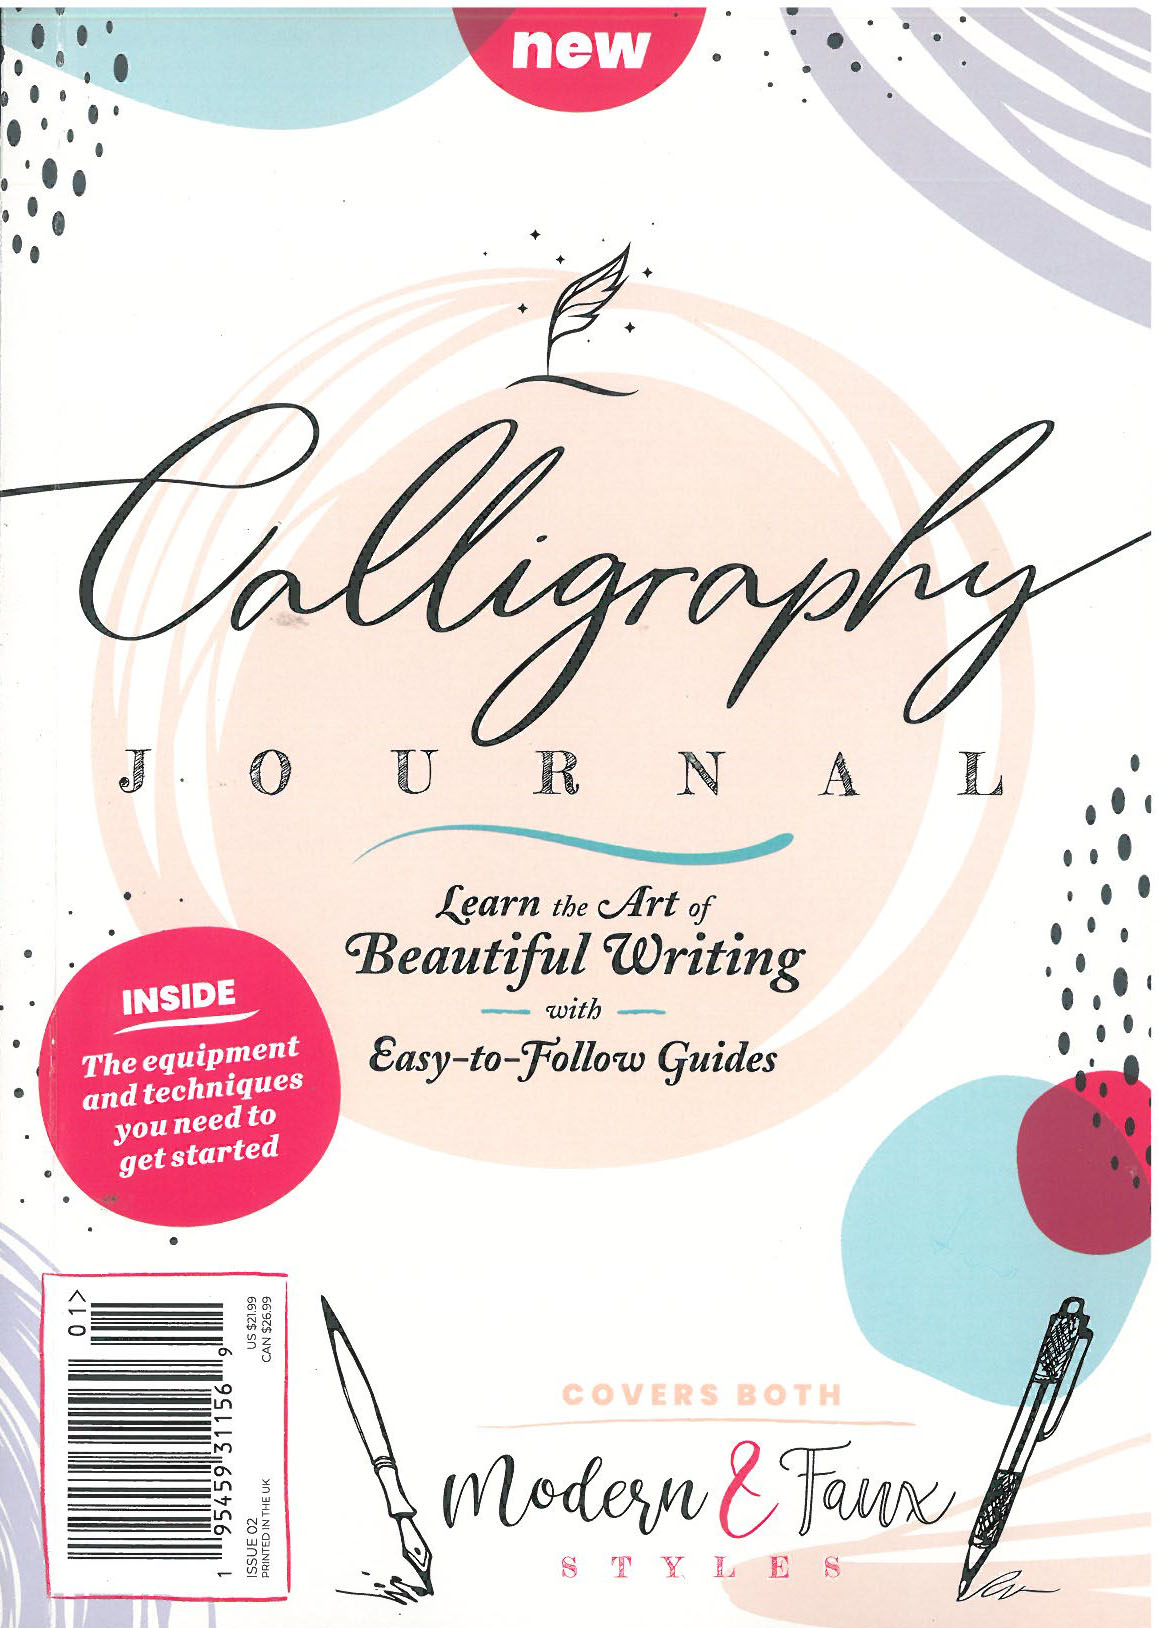 CALLIGRAPHY JOURNAL